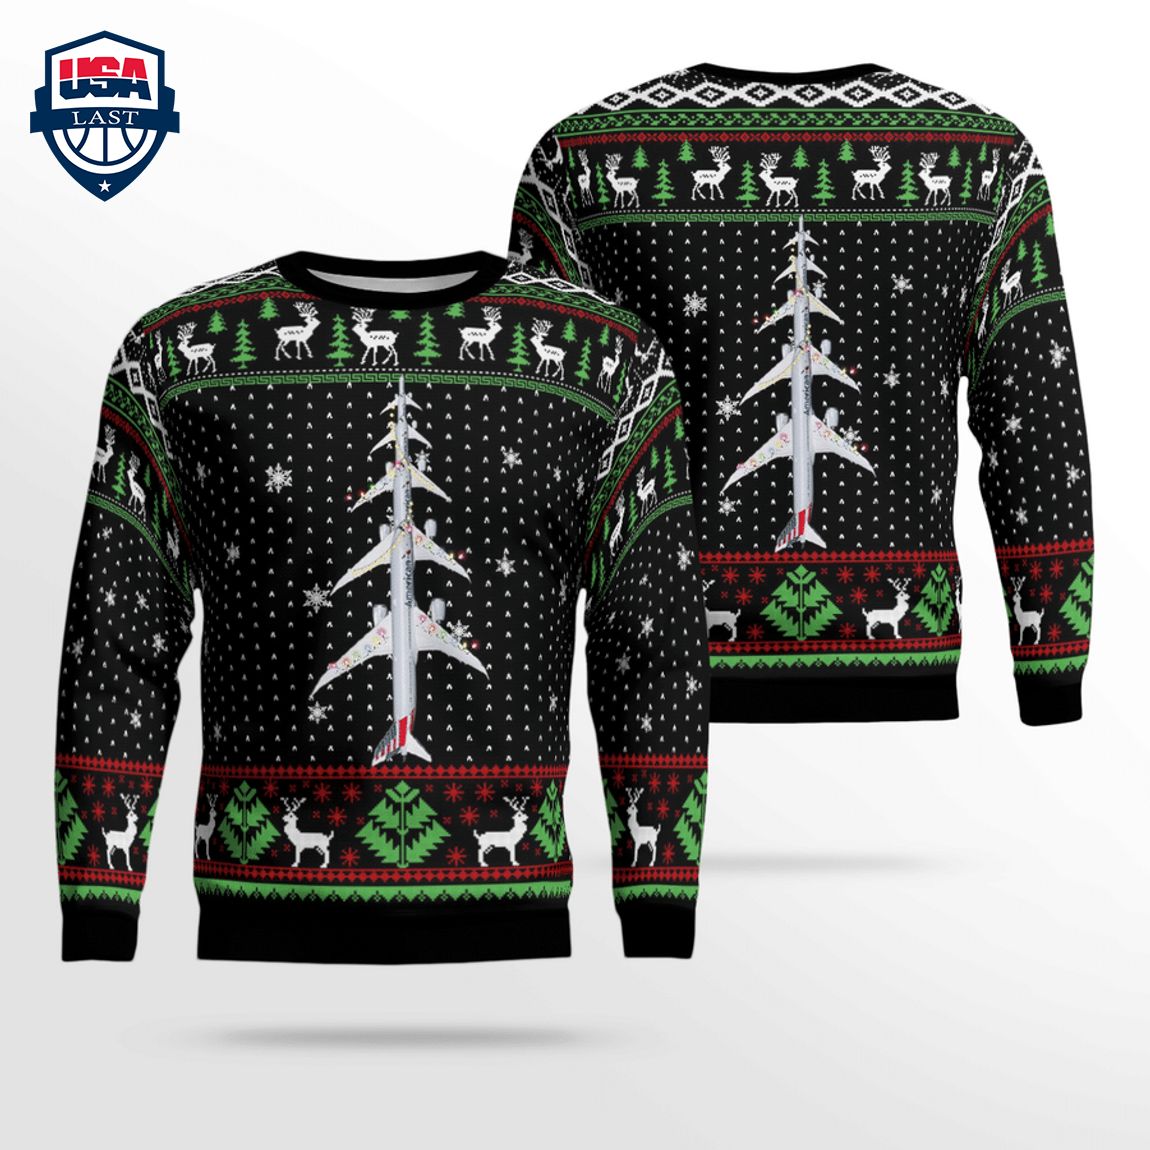 united-airlines-boeing-787-9-dreamliner-ver-2-3d-christmas-sweater-1-viOdx.jpg